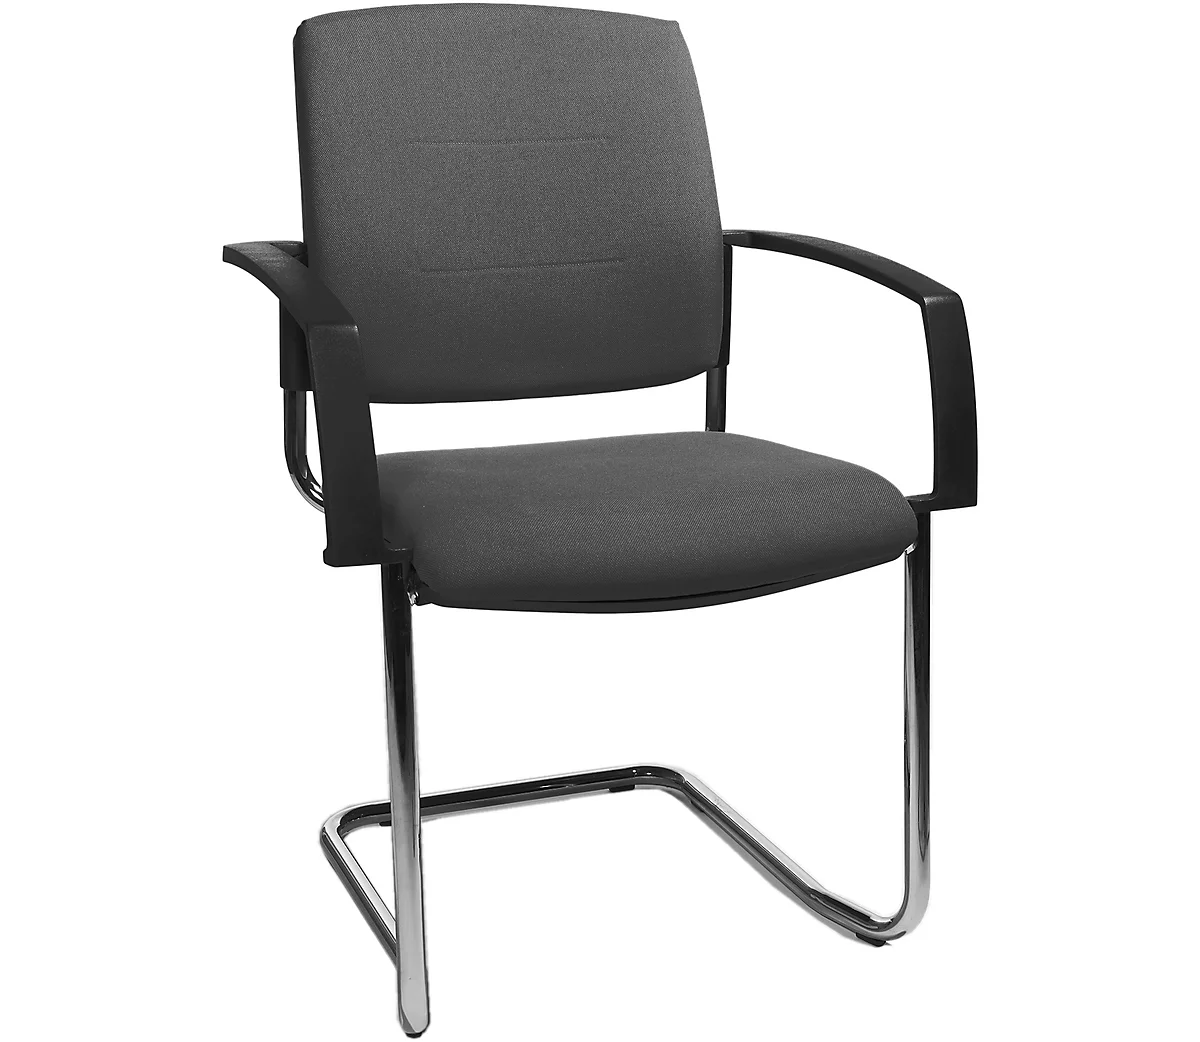 Schäfer Shop Select SSI Proline Visit P2 silla basculante, ergonómica, apoyabrazos, apilable hasta 4 piezas, A 480 x P 480 x A 480 mm, aluminio plata/antracita